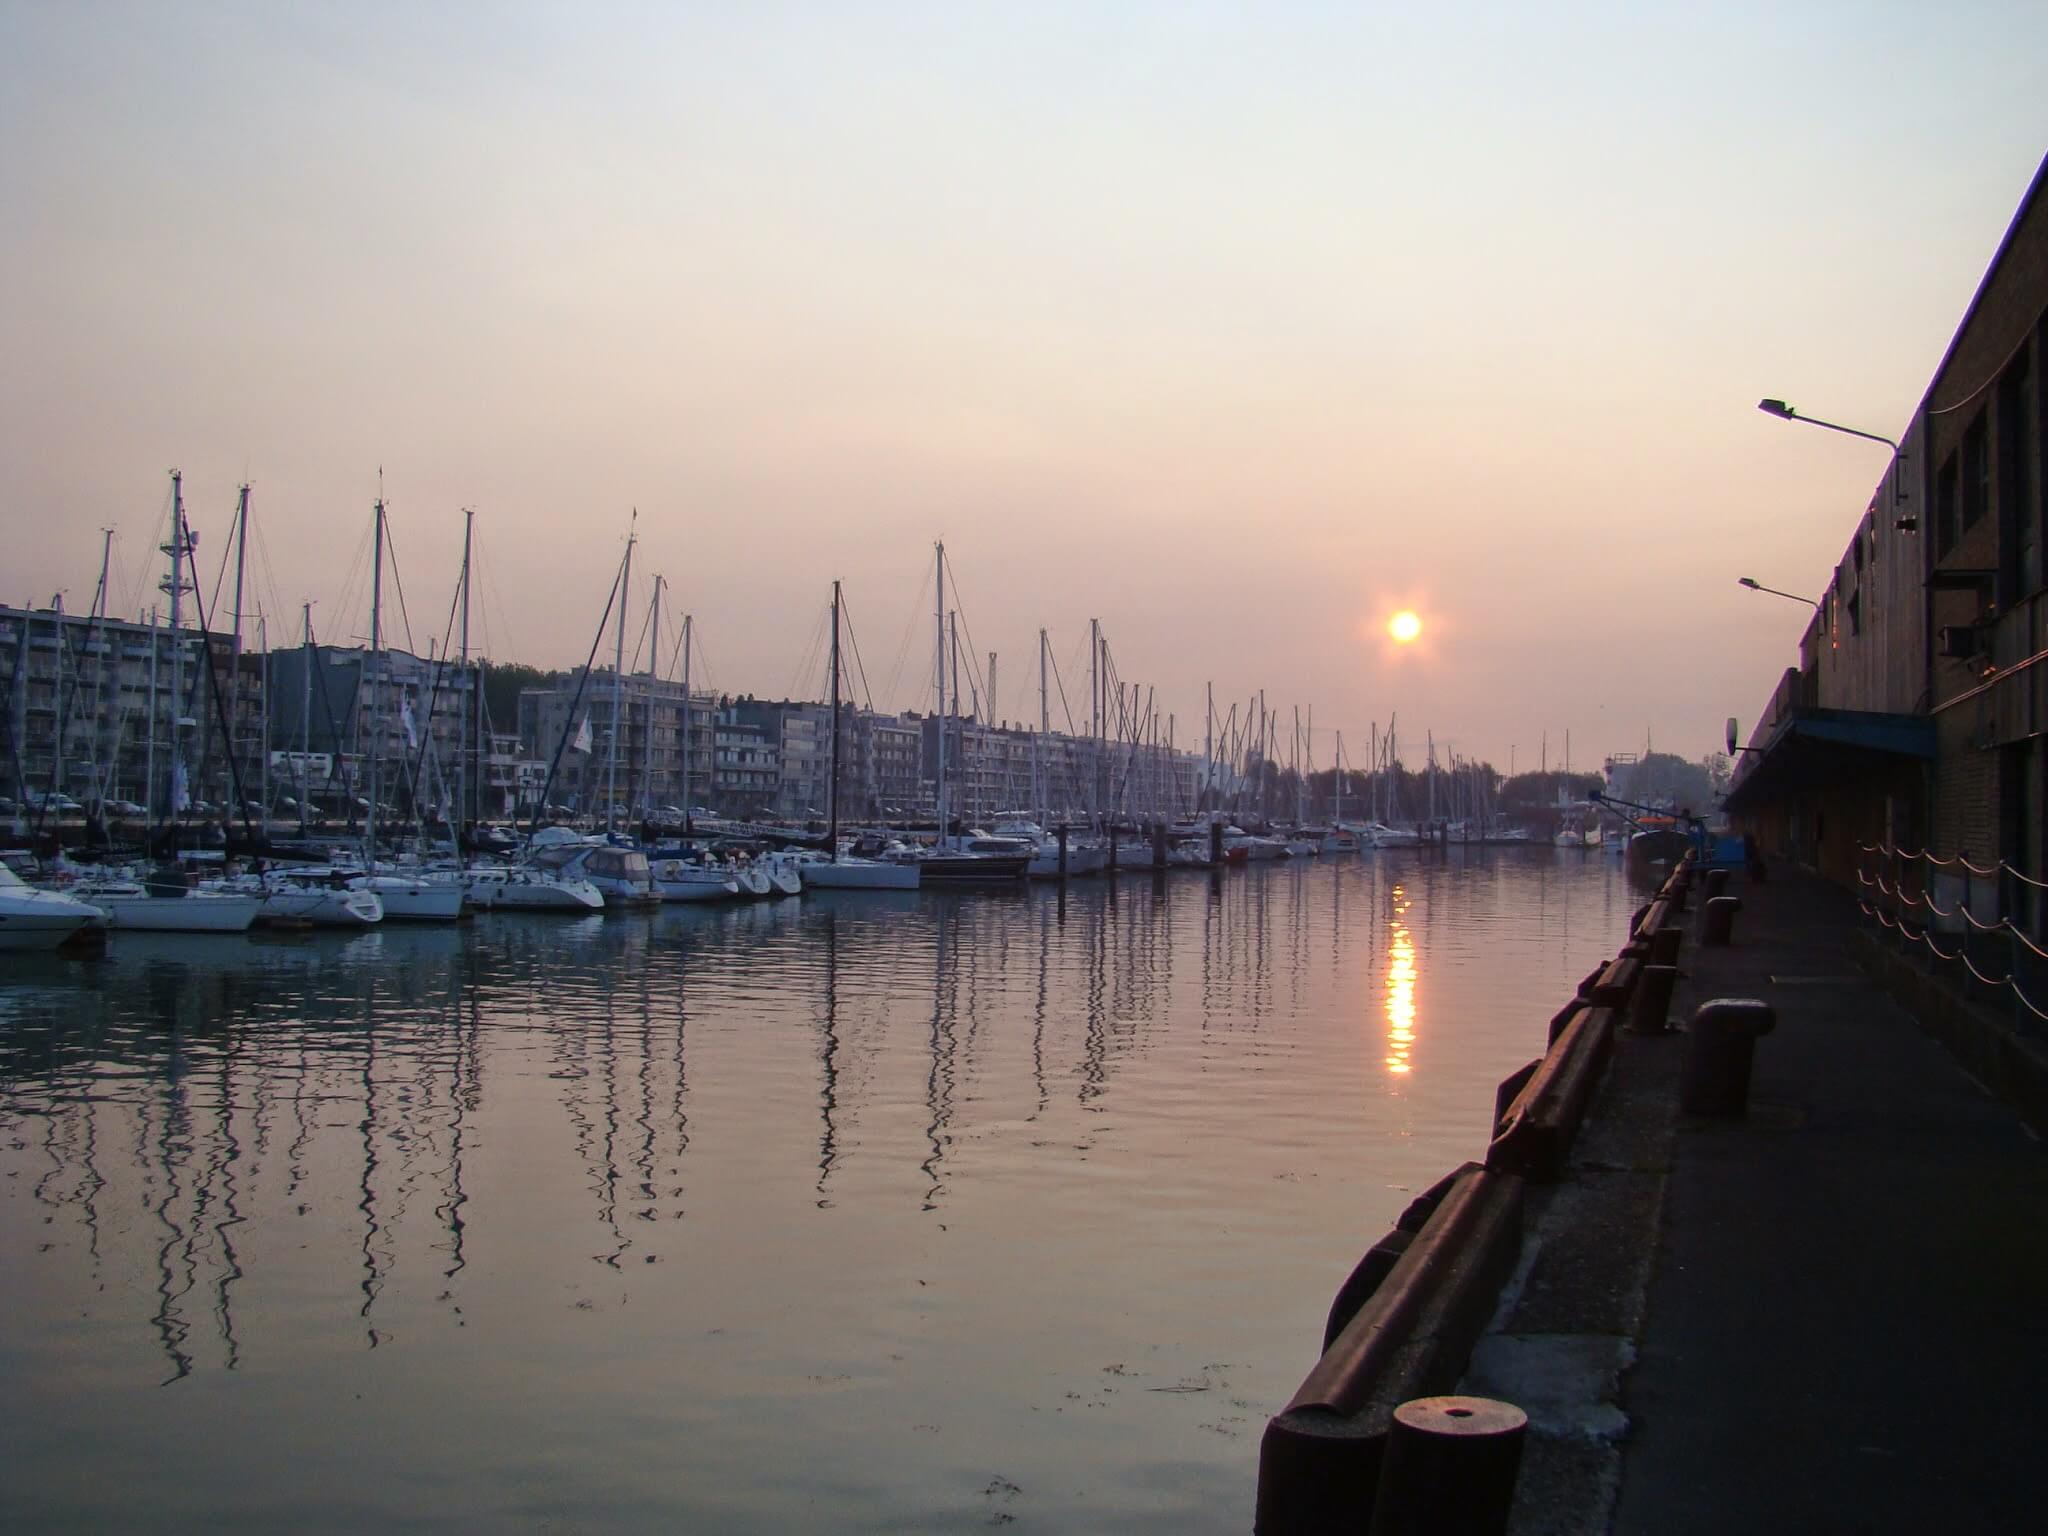 Morning port in Zeebrugge